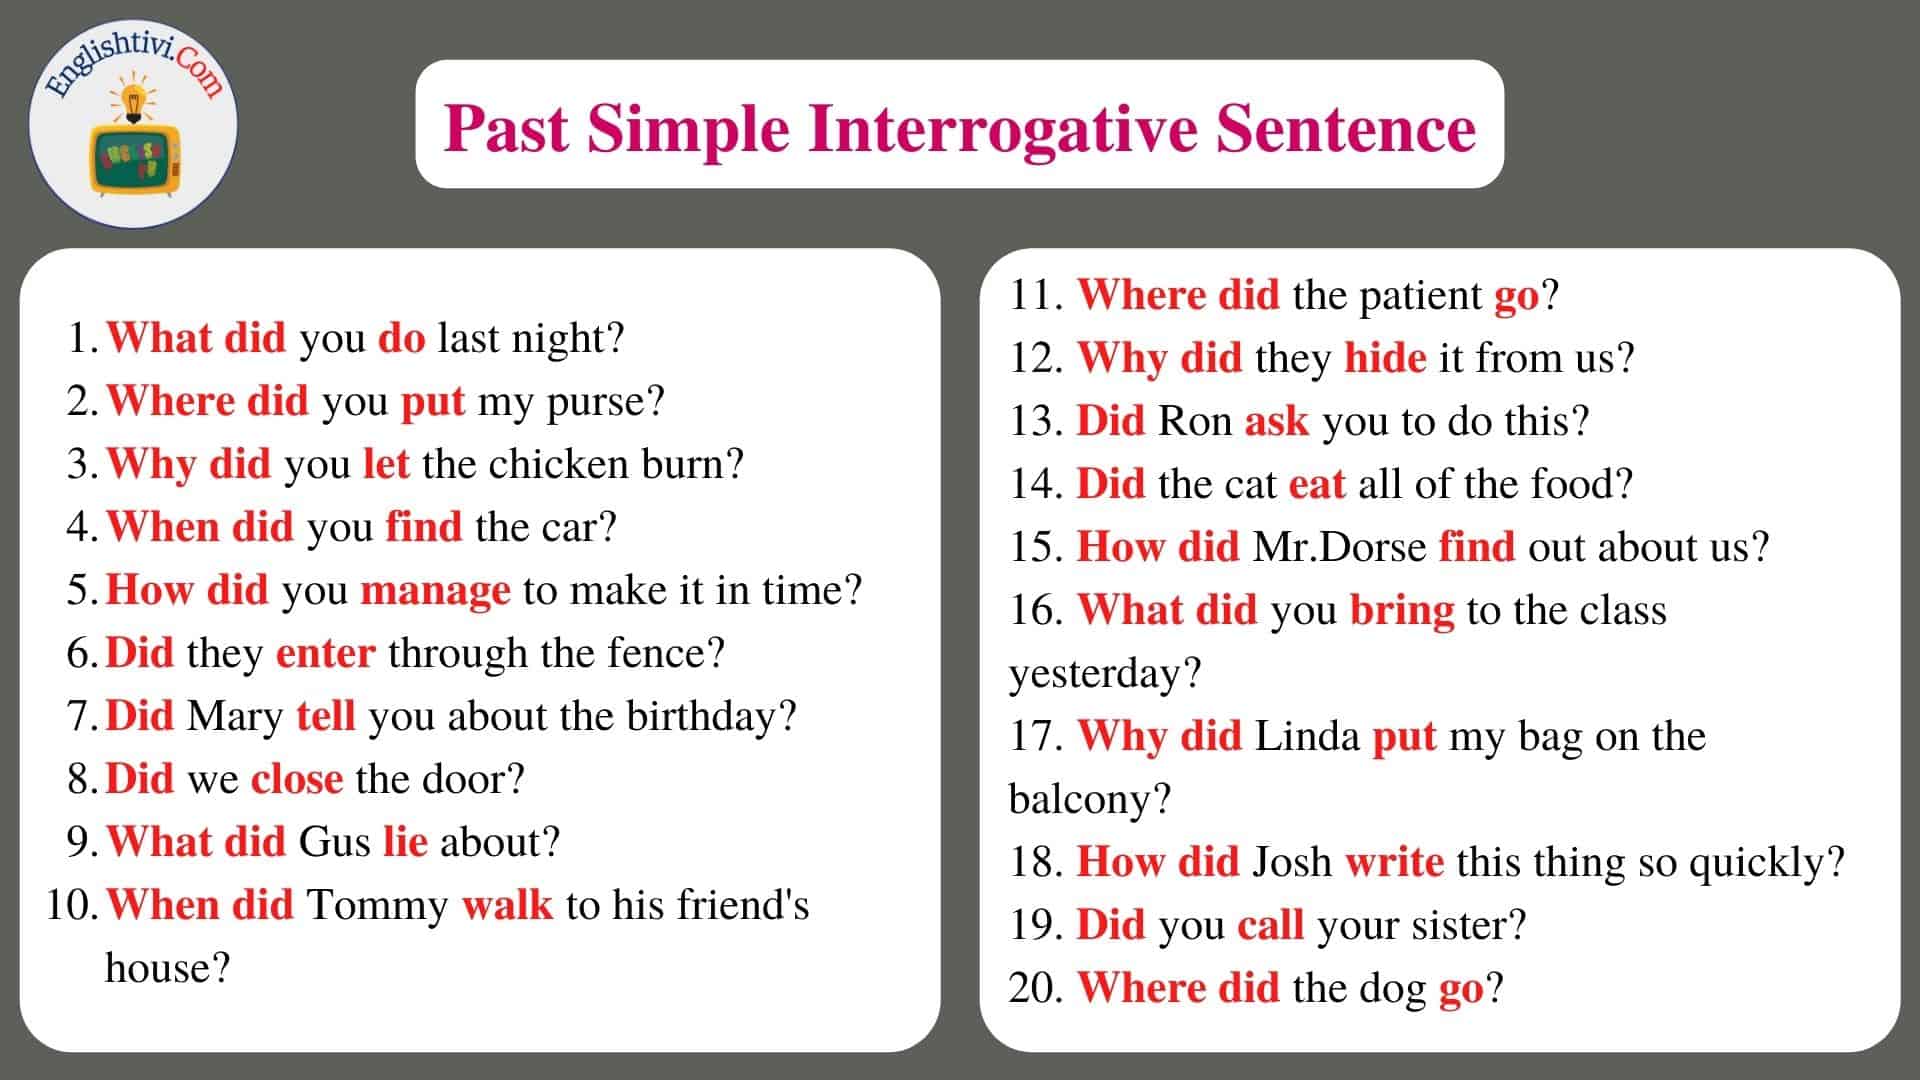 Past_Simple_Interrogative_Sentence